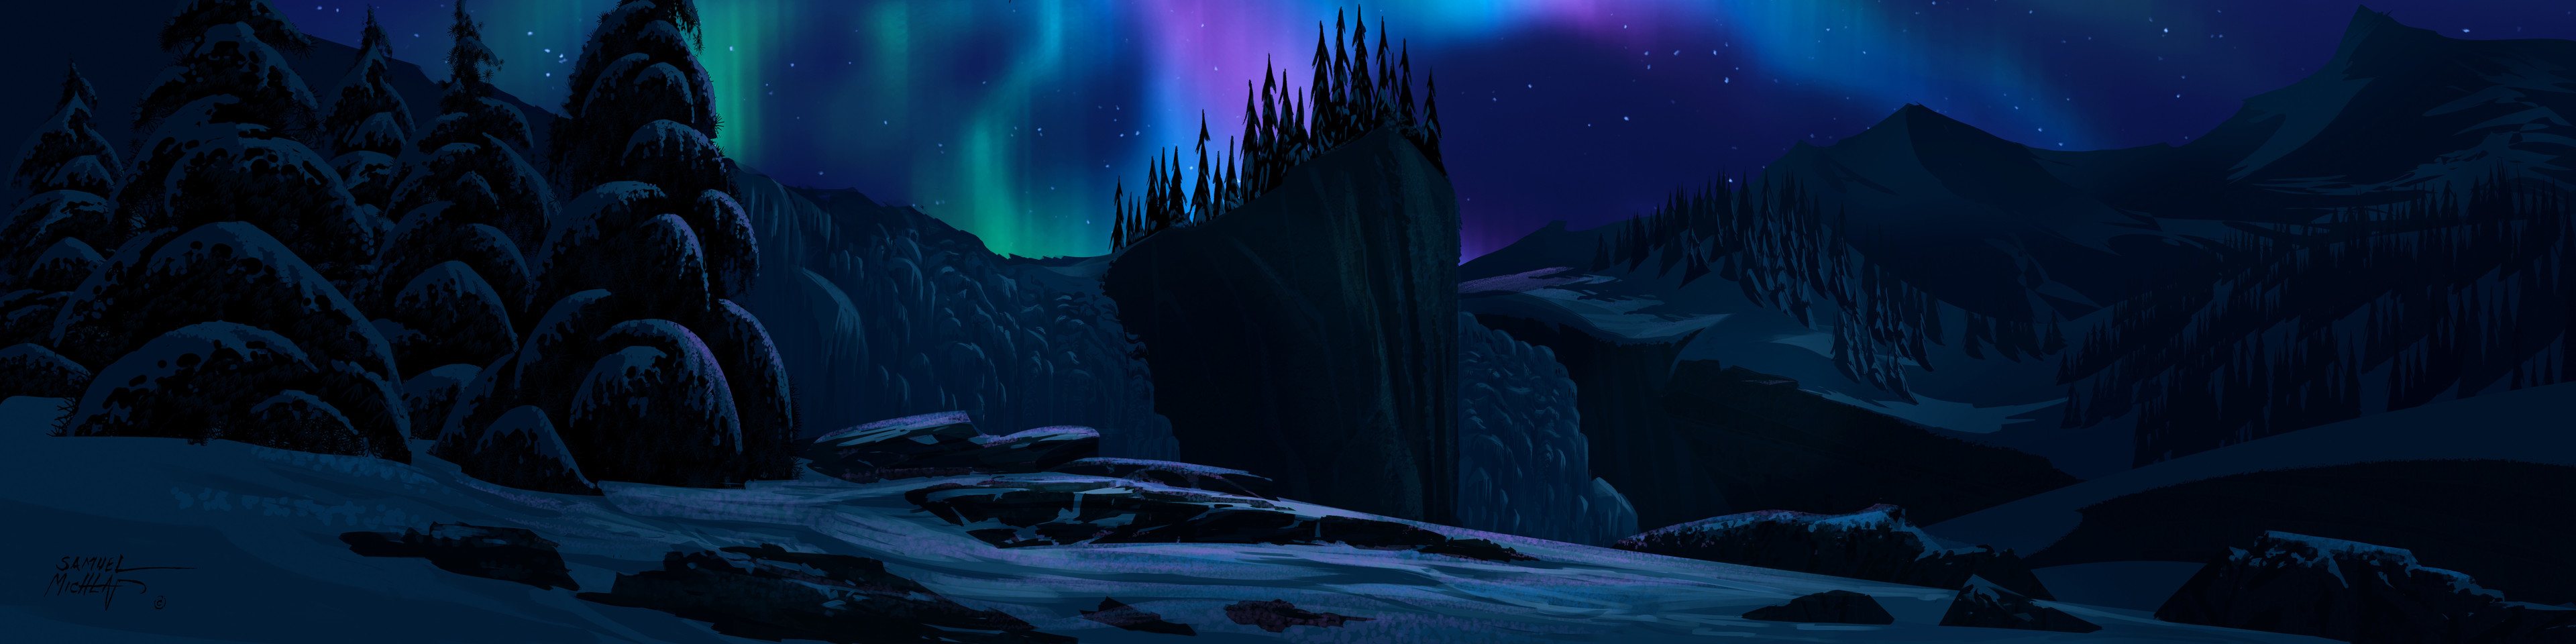 Aurora Borealis sky treatment